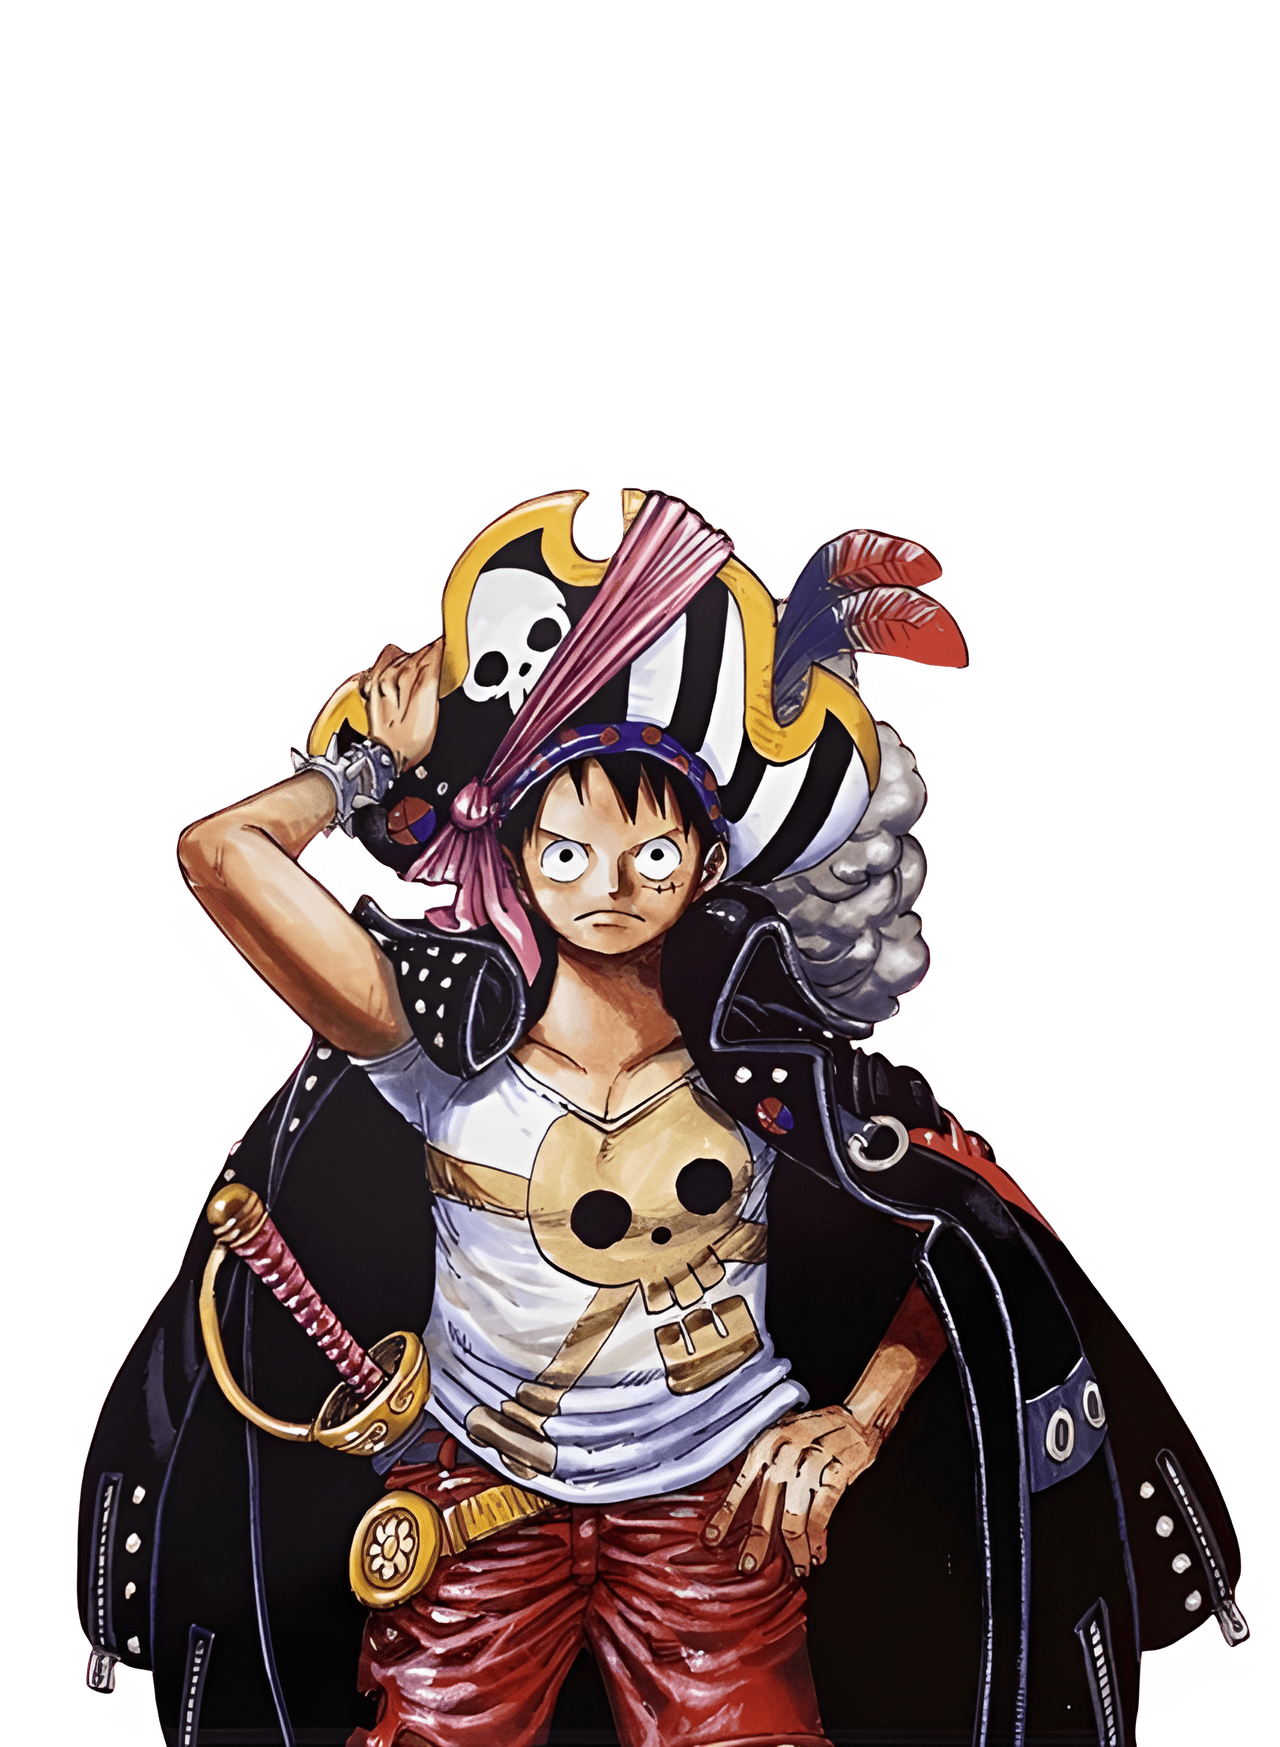 Luffy-perfil by design-otk on DeviantArt